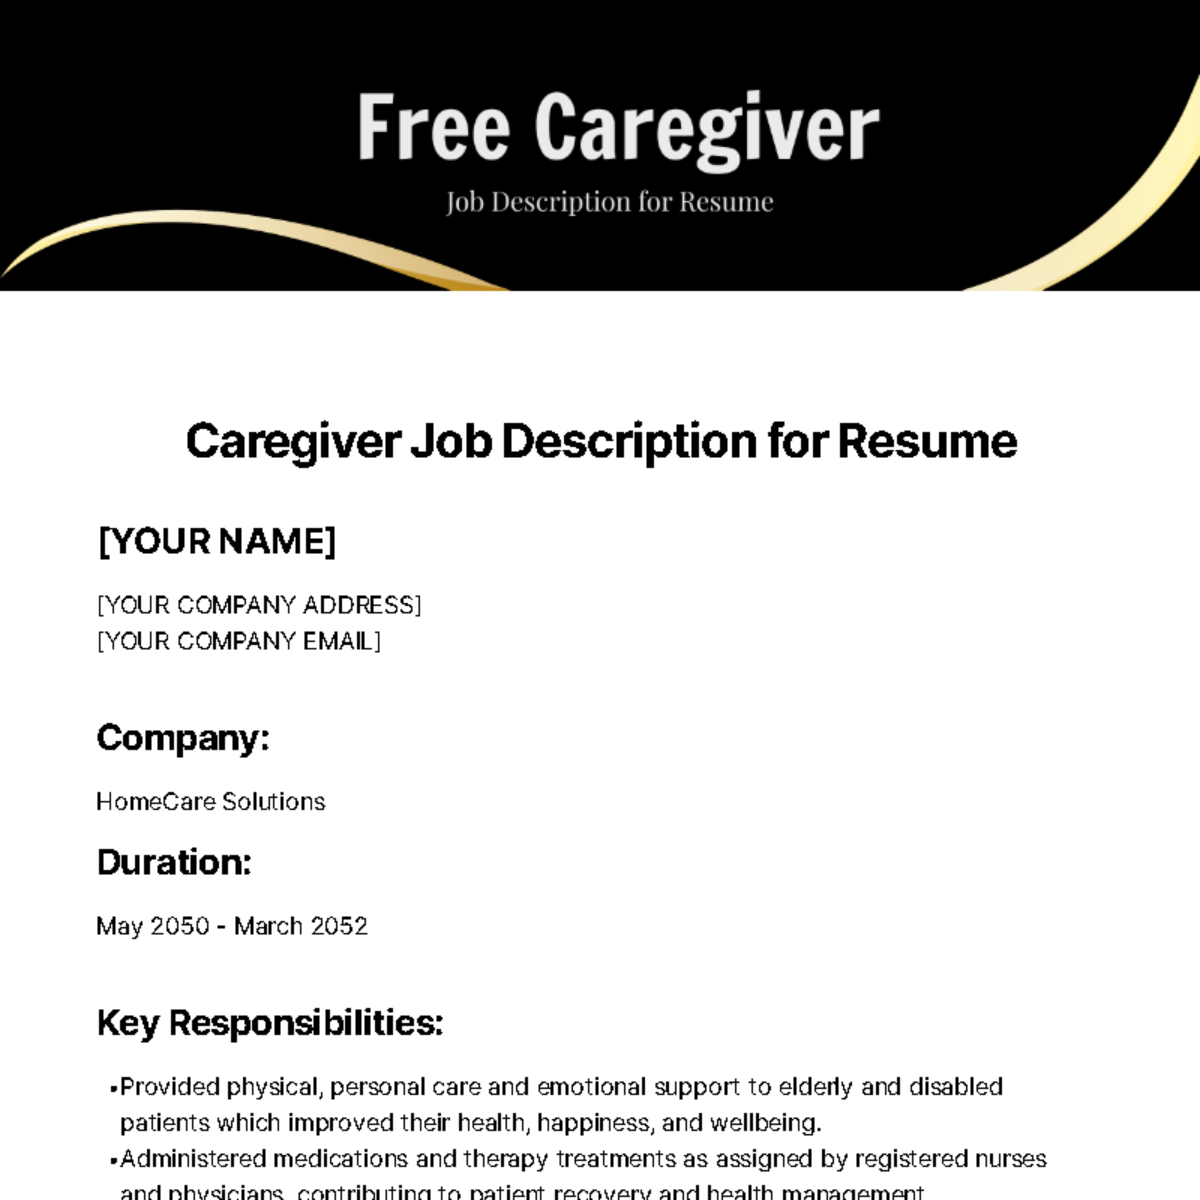 Caregiver Job Description for Resume Template